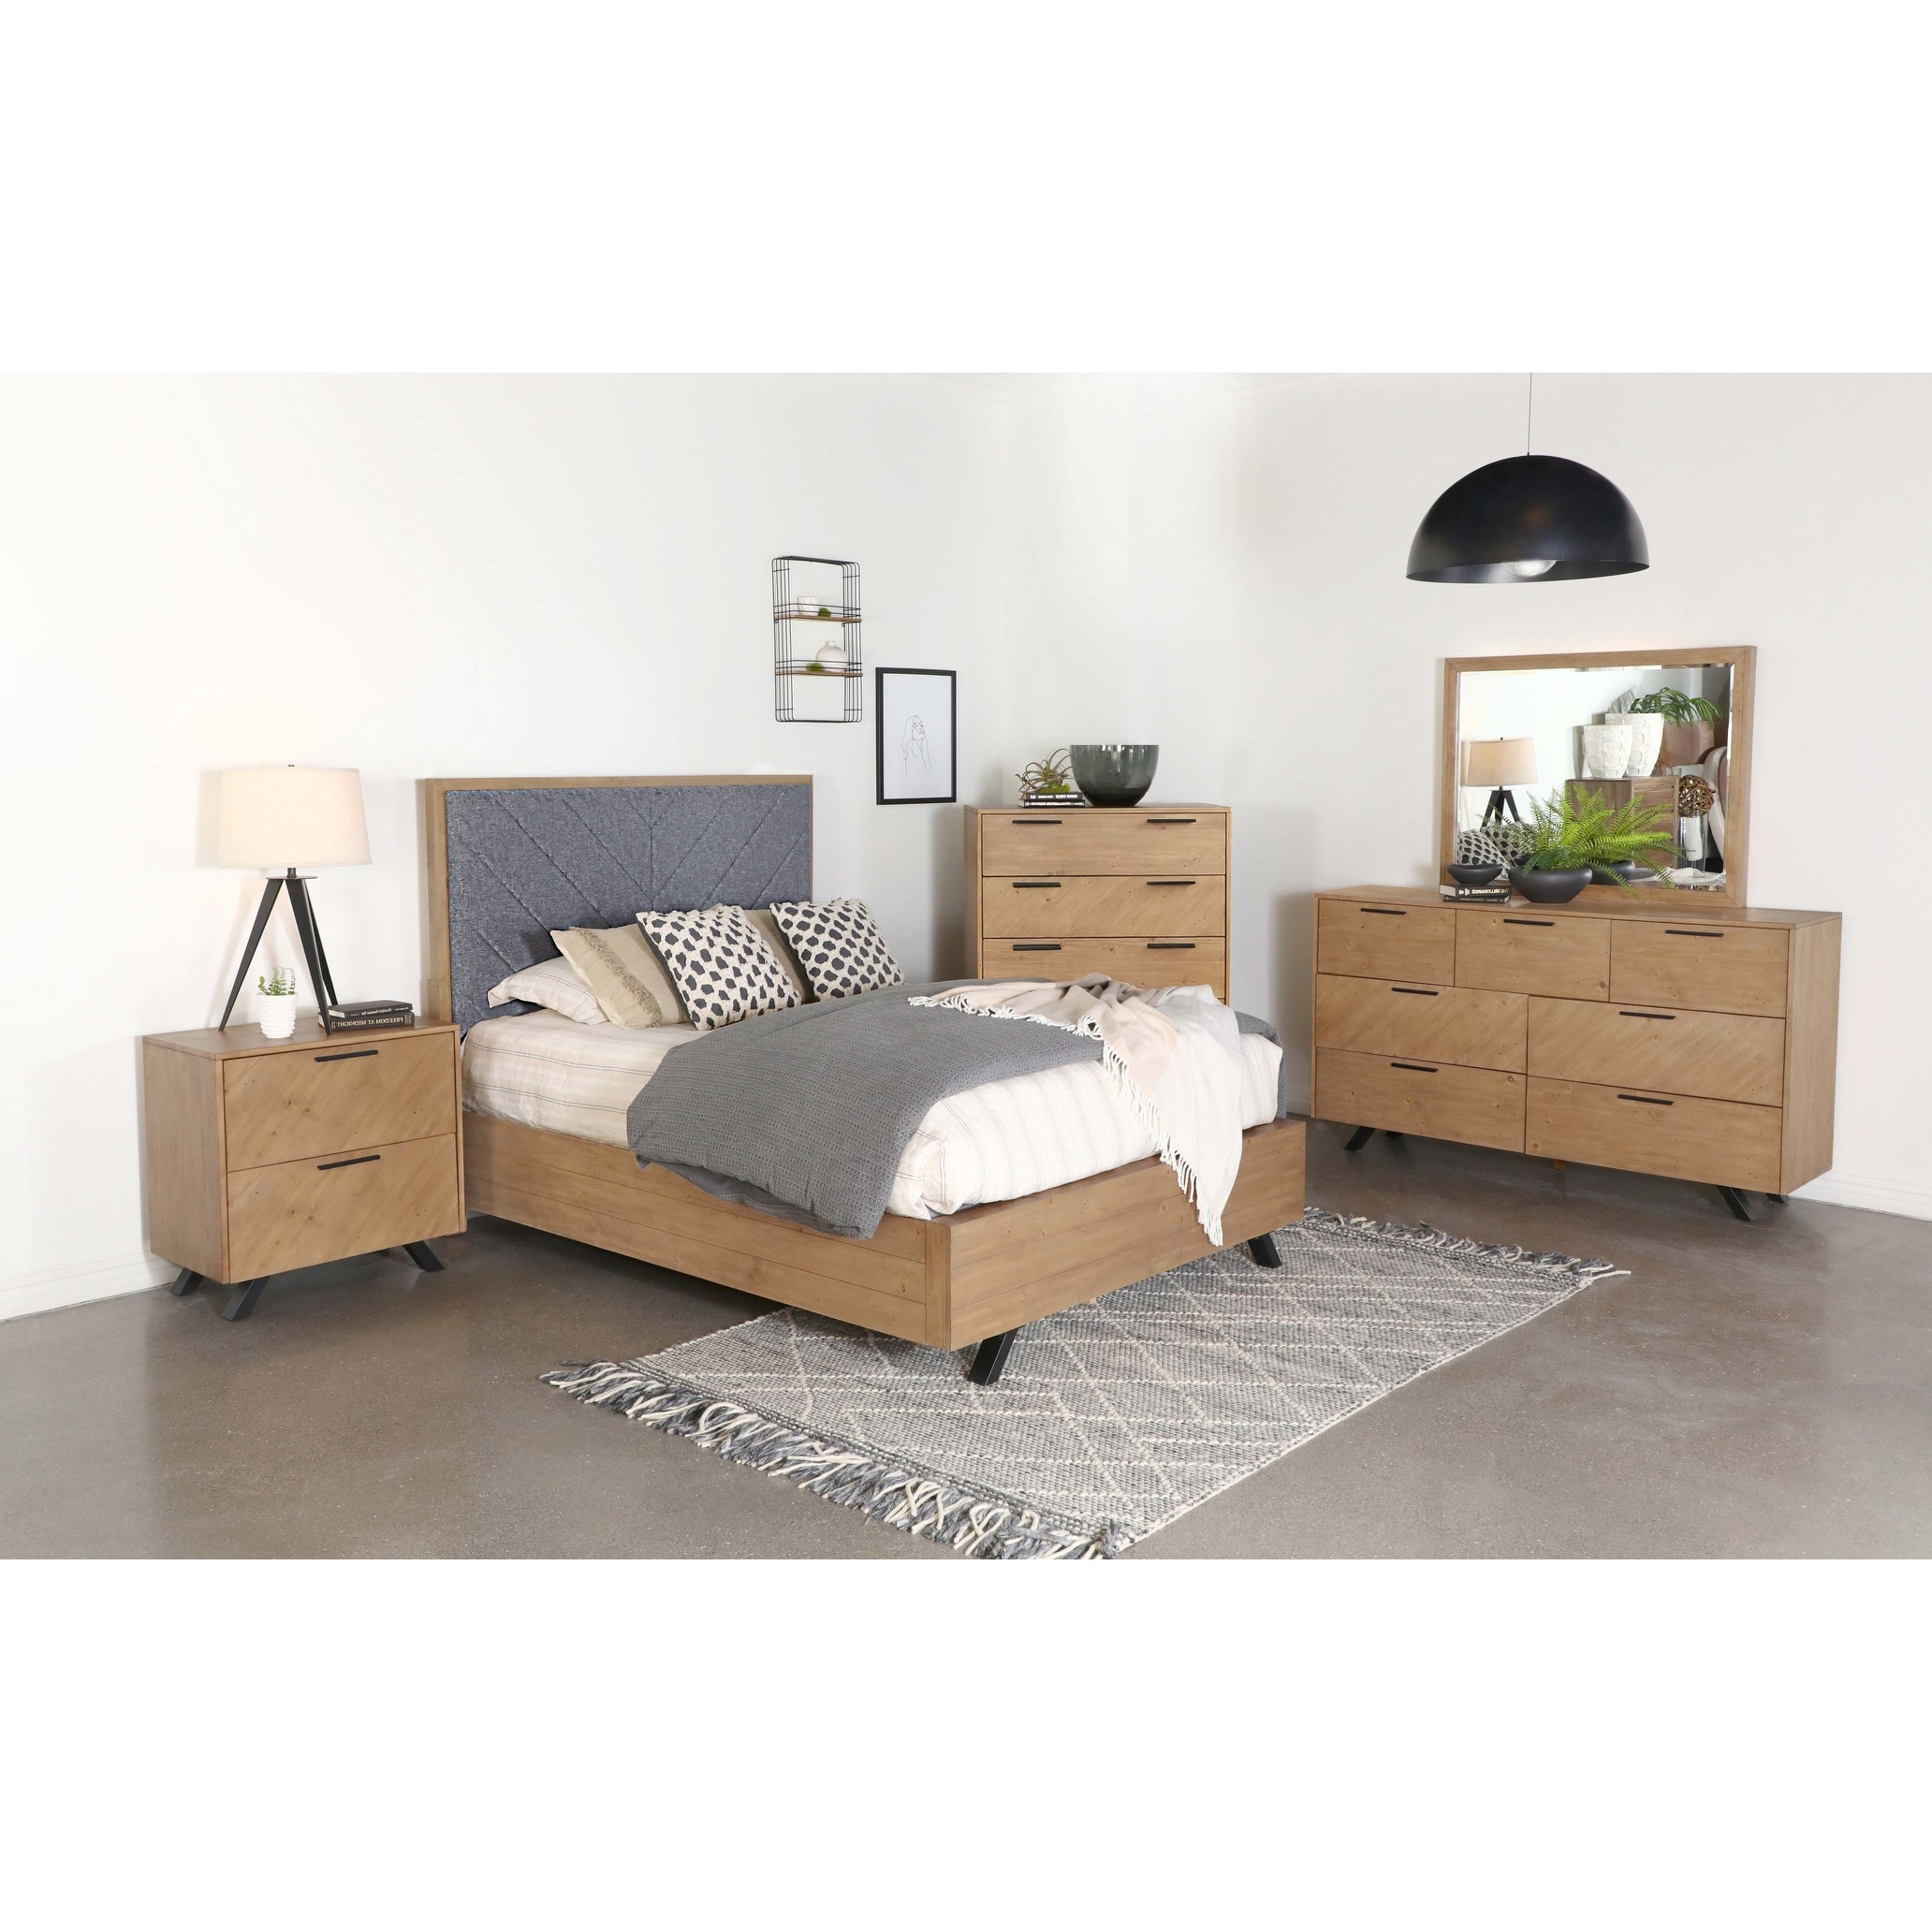 coaster furniture louis philippe cedar dresser warm brown